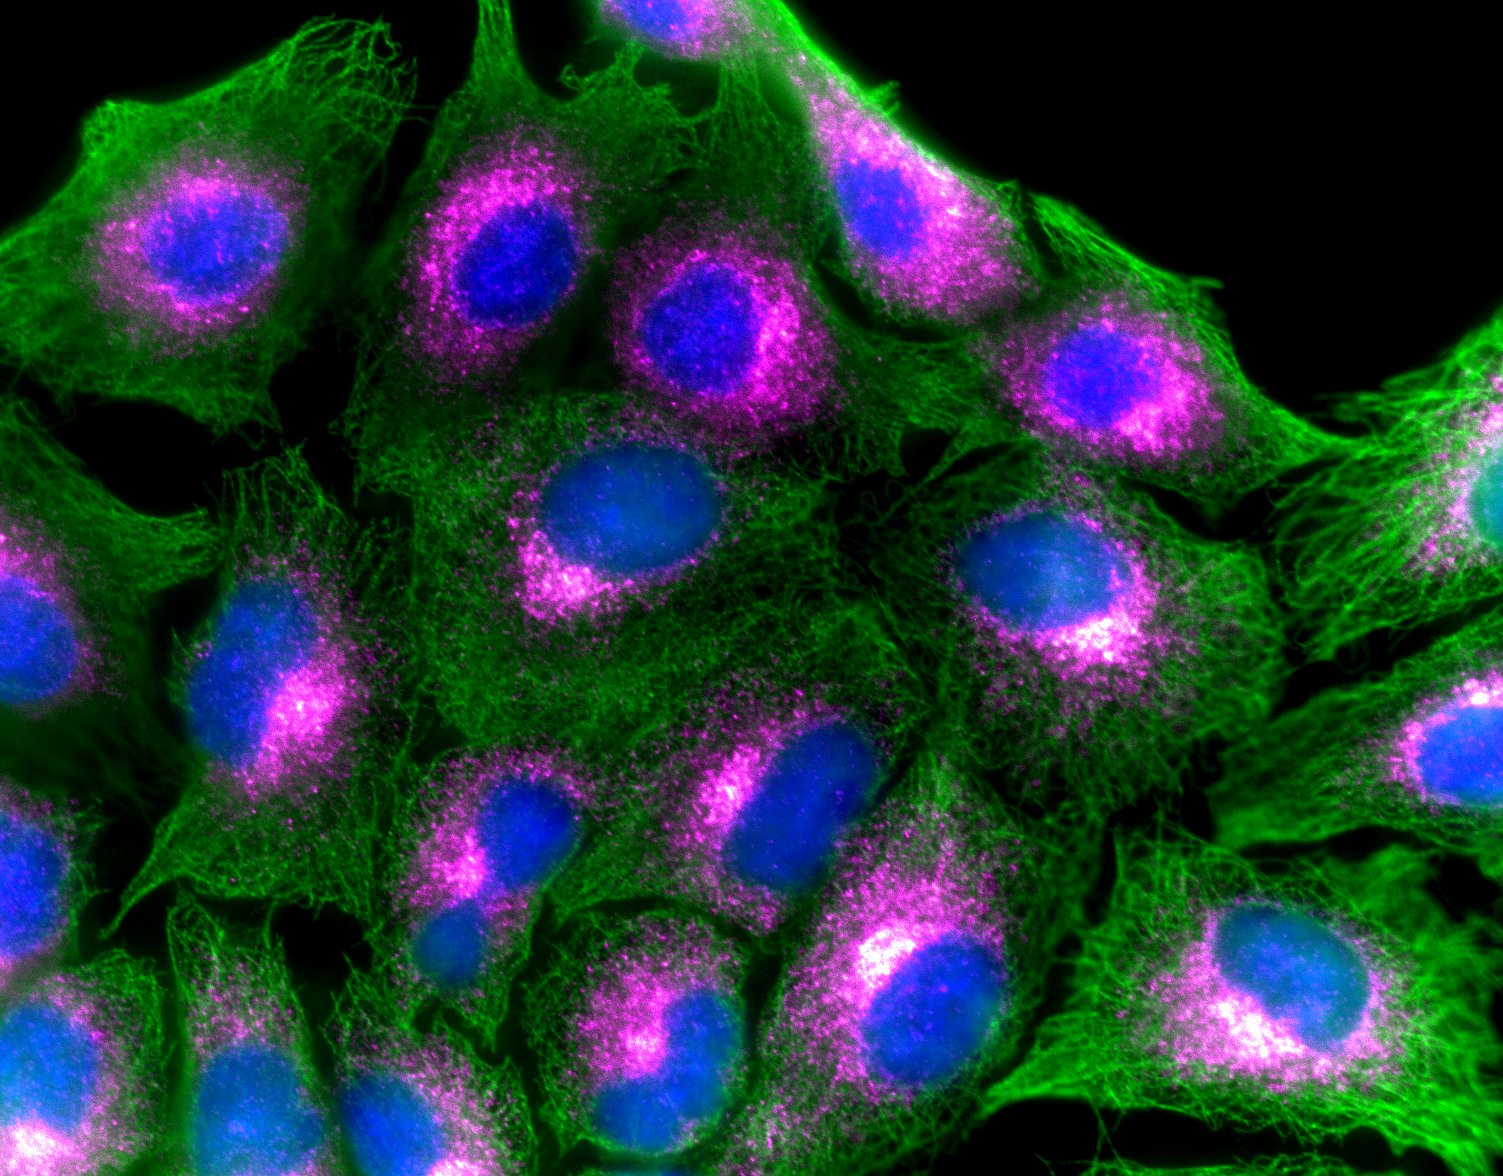 airway cells tubulin green eNOS pink nuclei blue